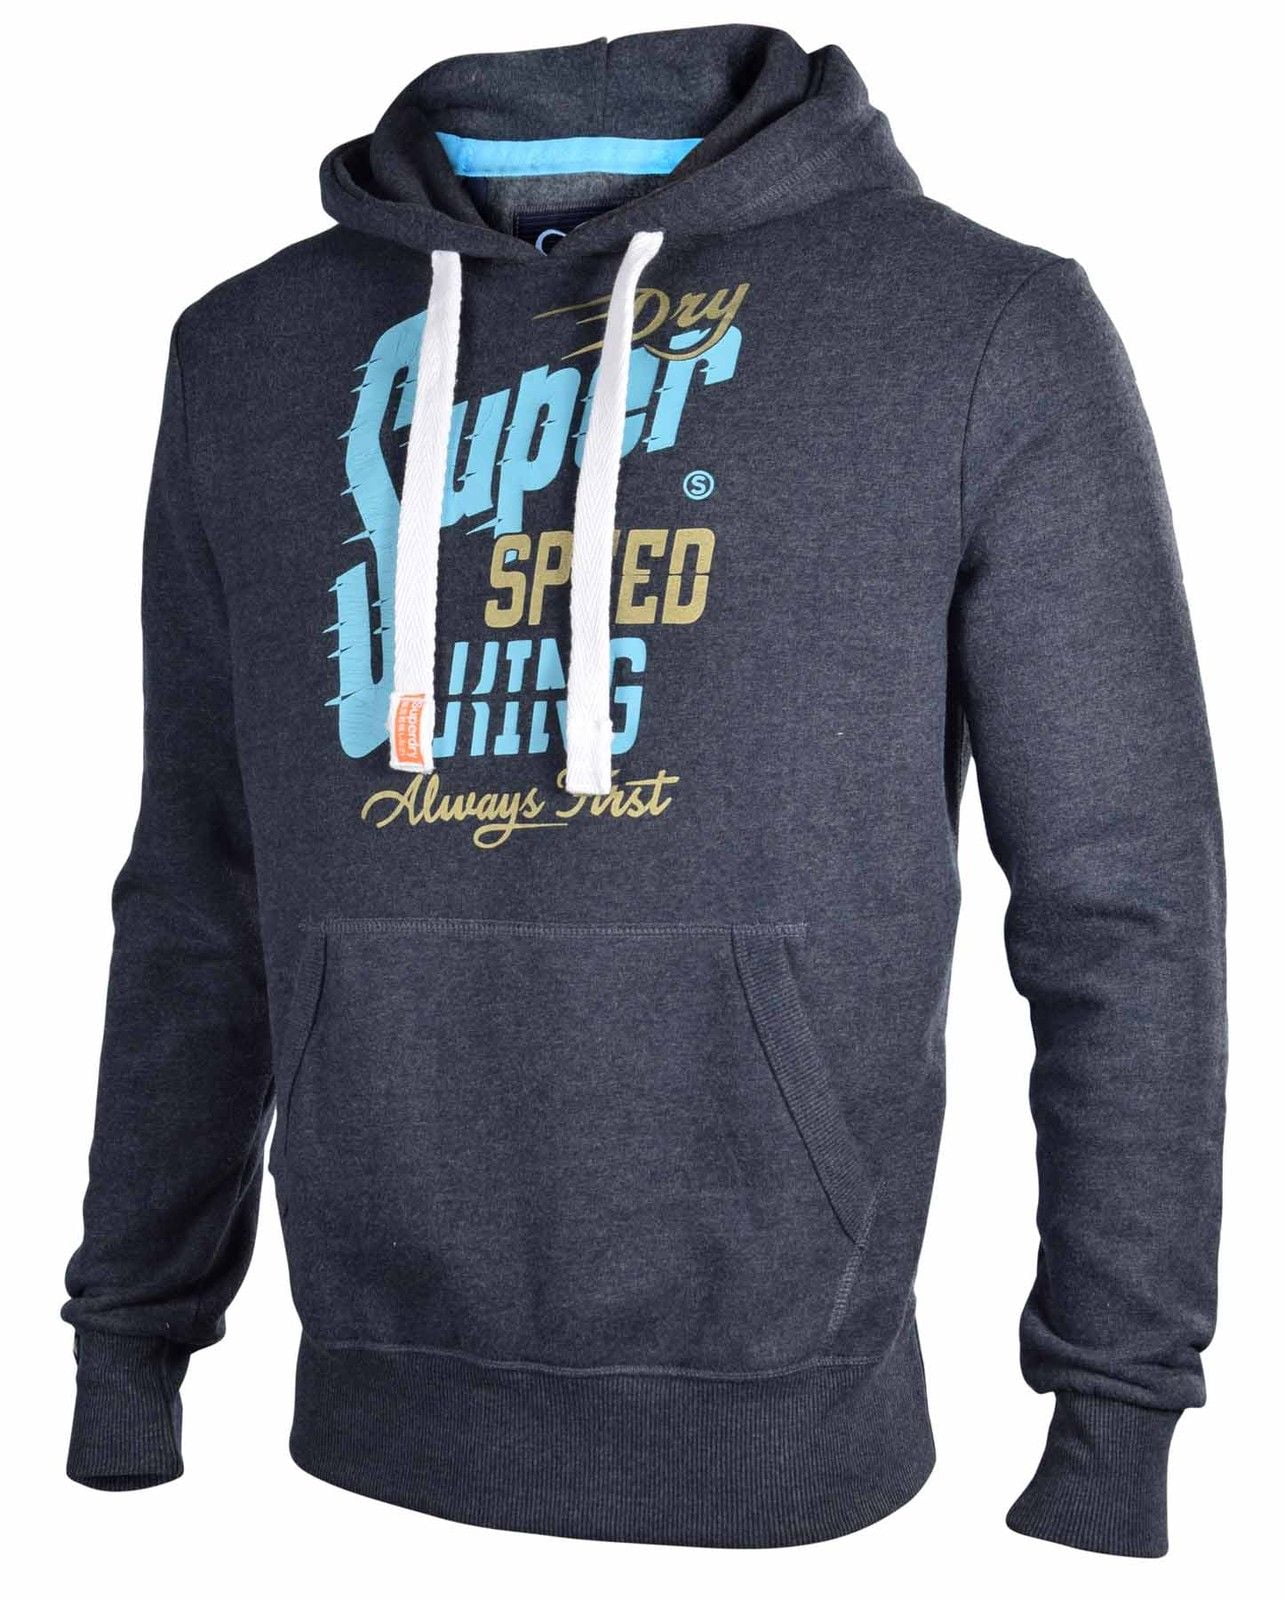 Speedo Unisex-Adult Sweatshirt Vintage Heavy Weight Hoodie